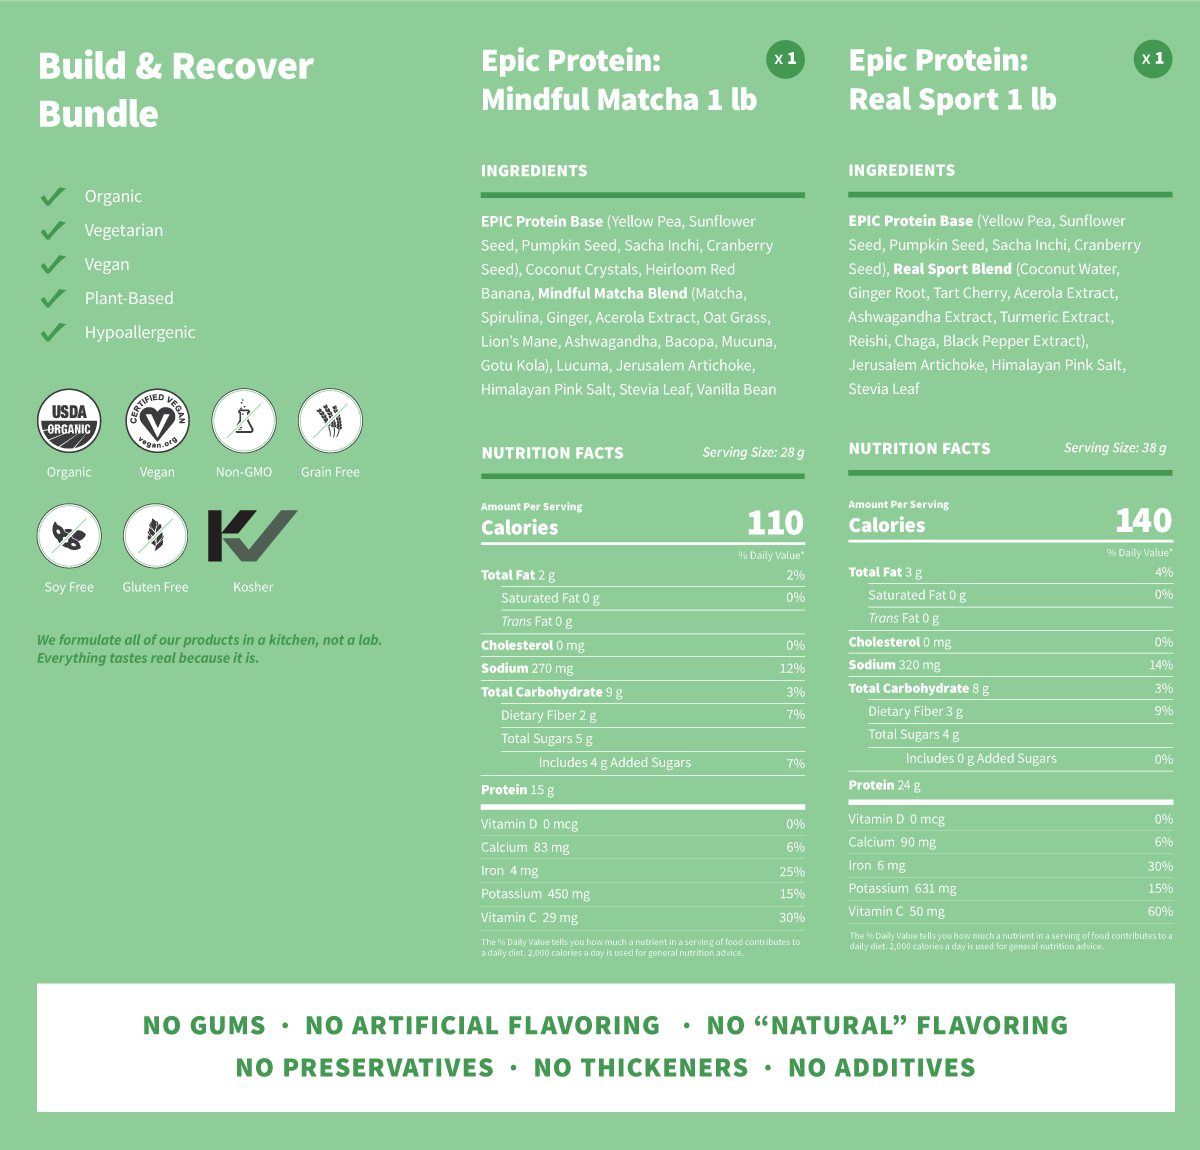 Build & Recover Bundle Nutrition Facts